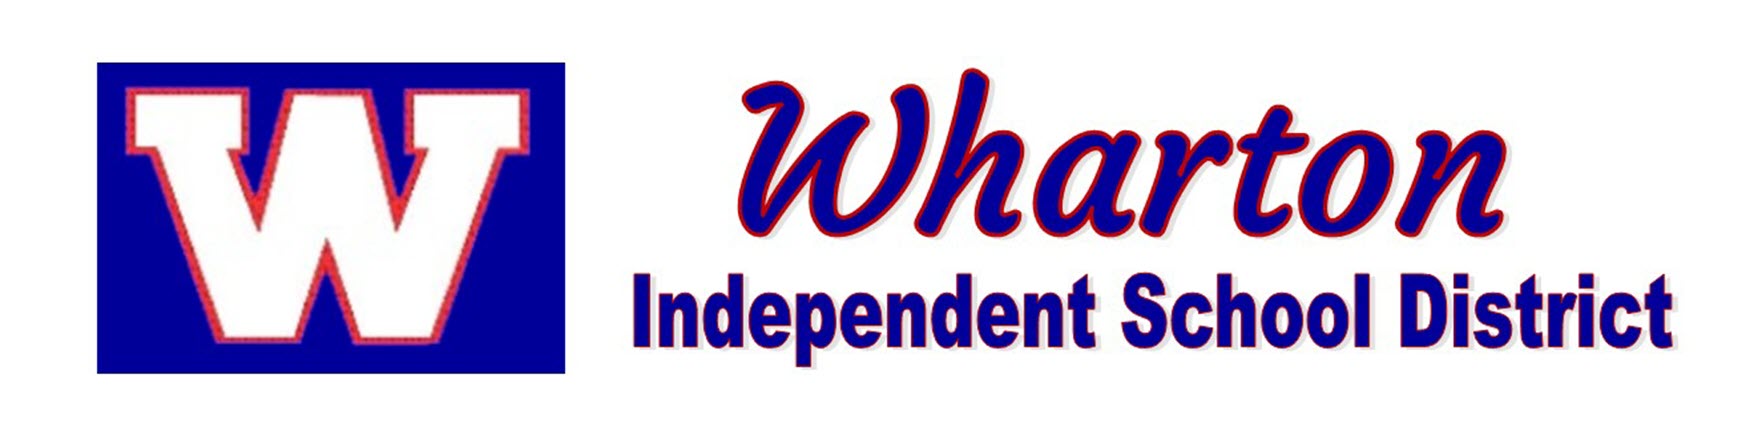 Wharton Independent School District Logo